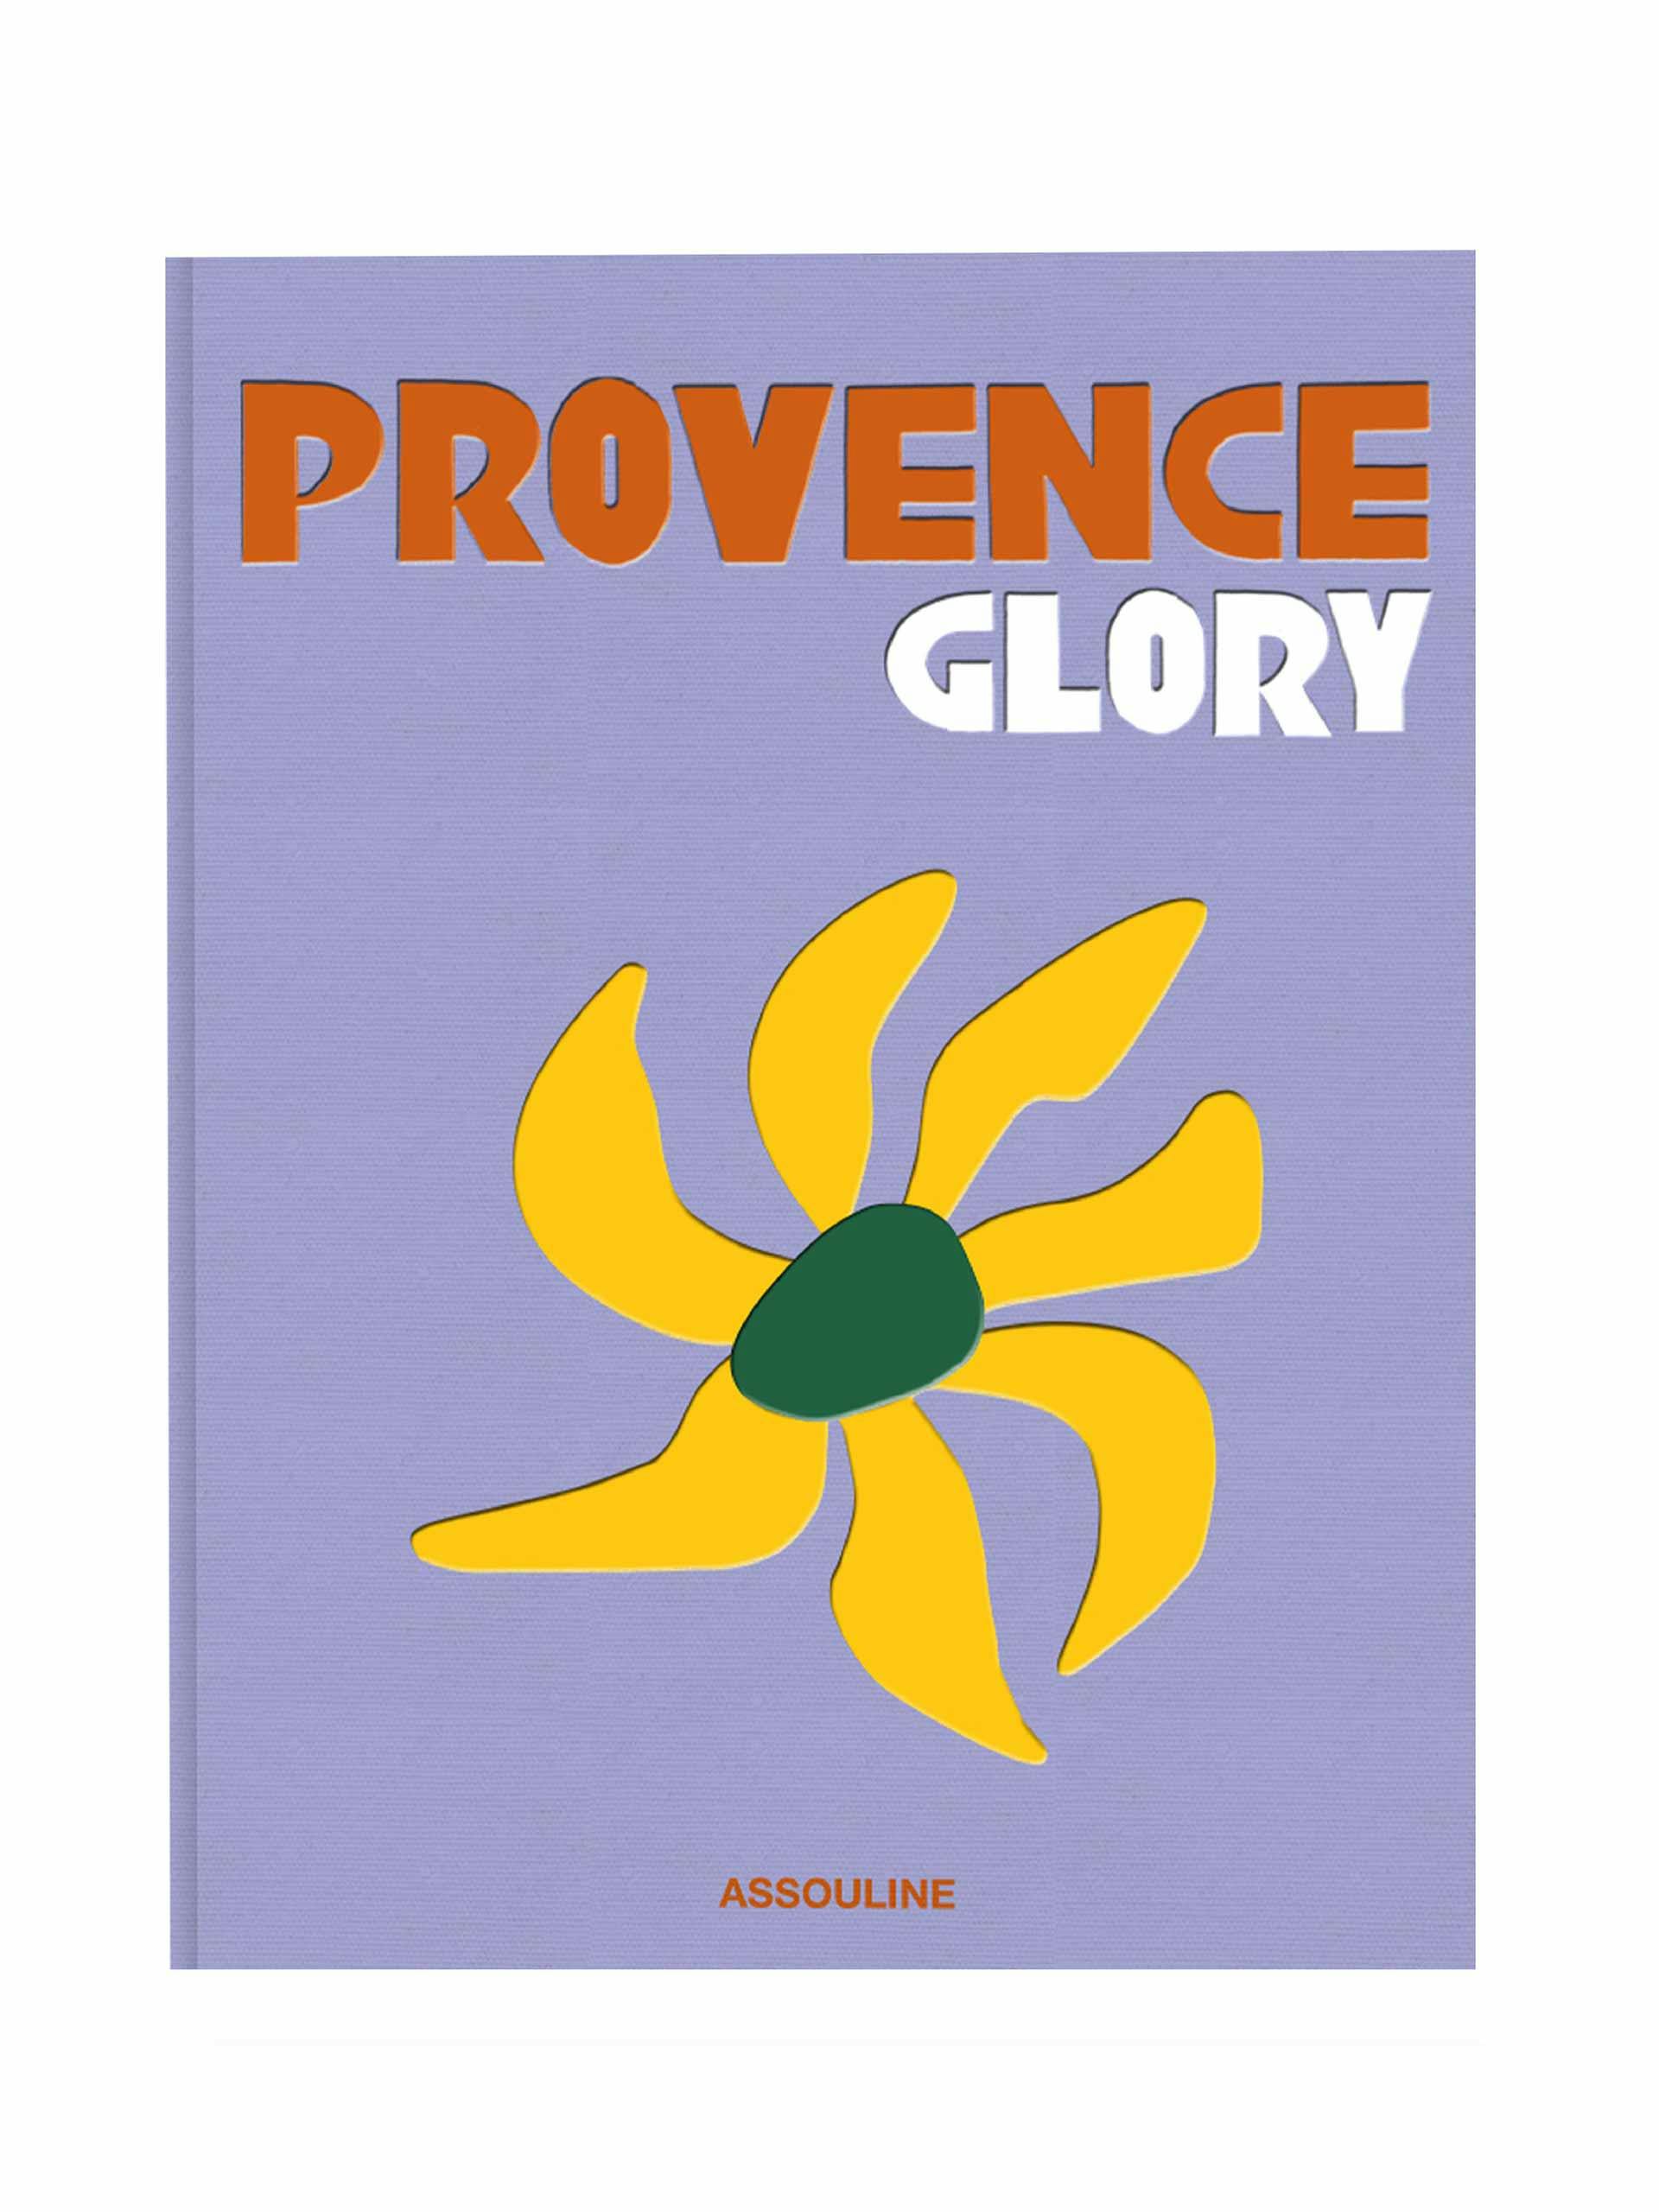 Provence Glory' by Francois Simon